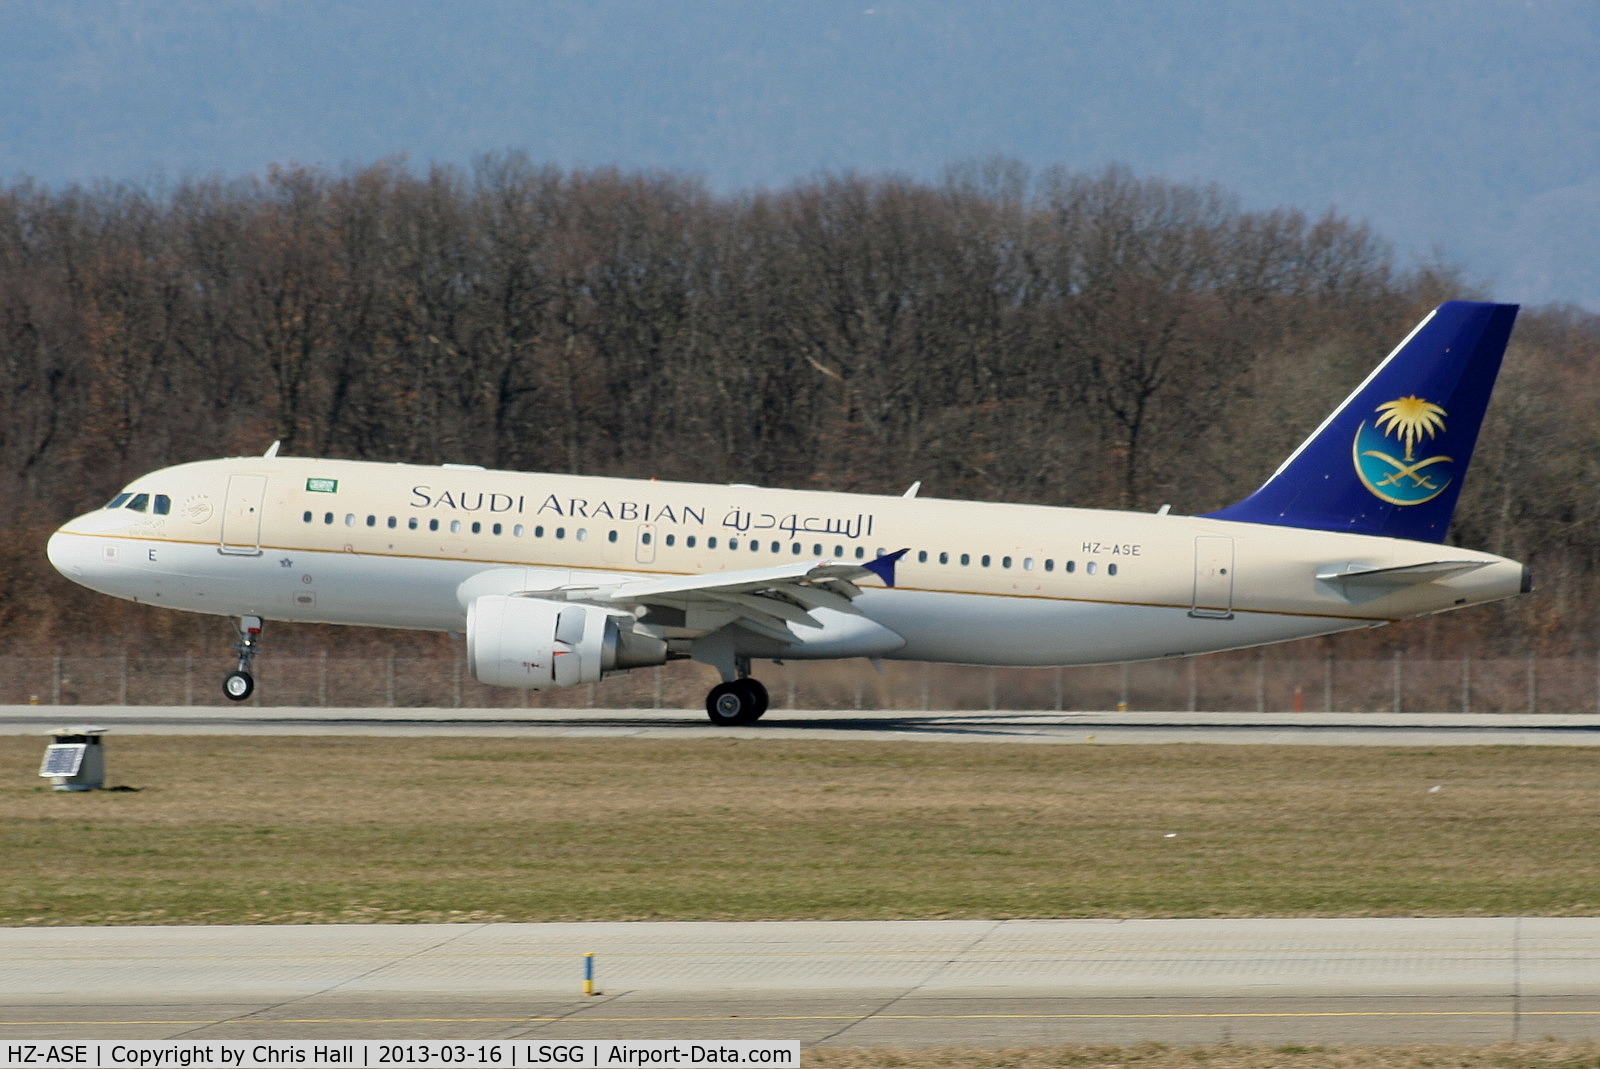 HZ-ASE, 2010 Airbus A320-214 C/N 4408, Saudi Arabian Airlines